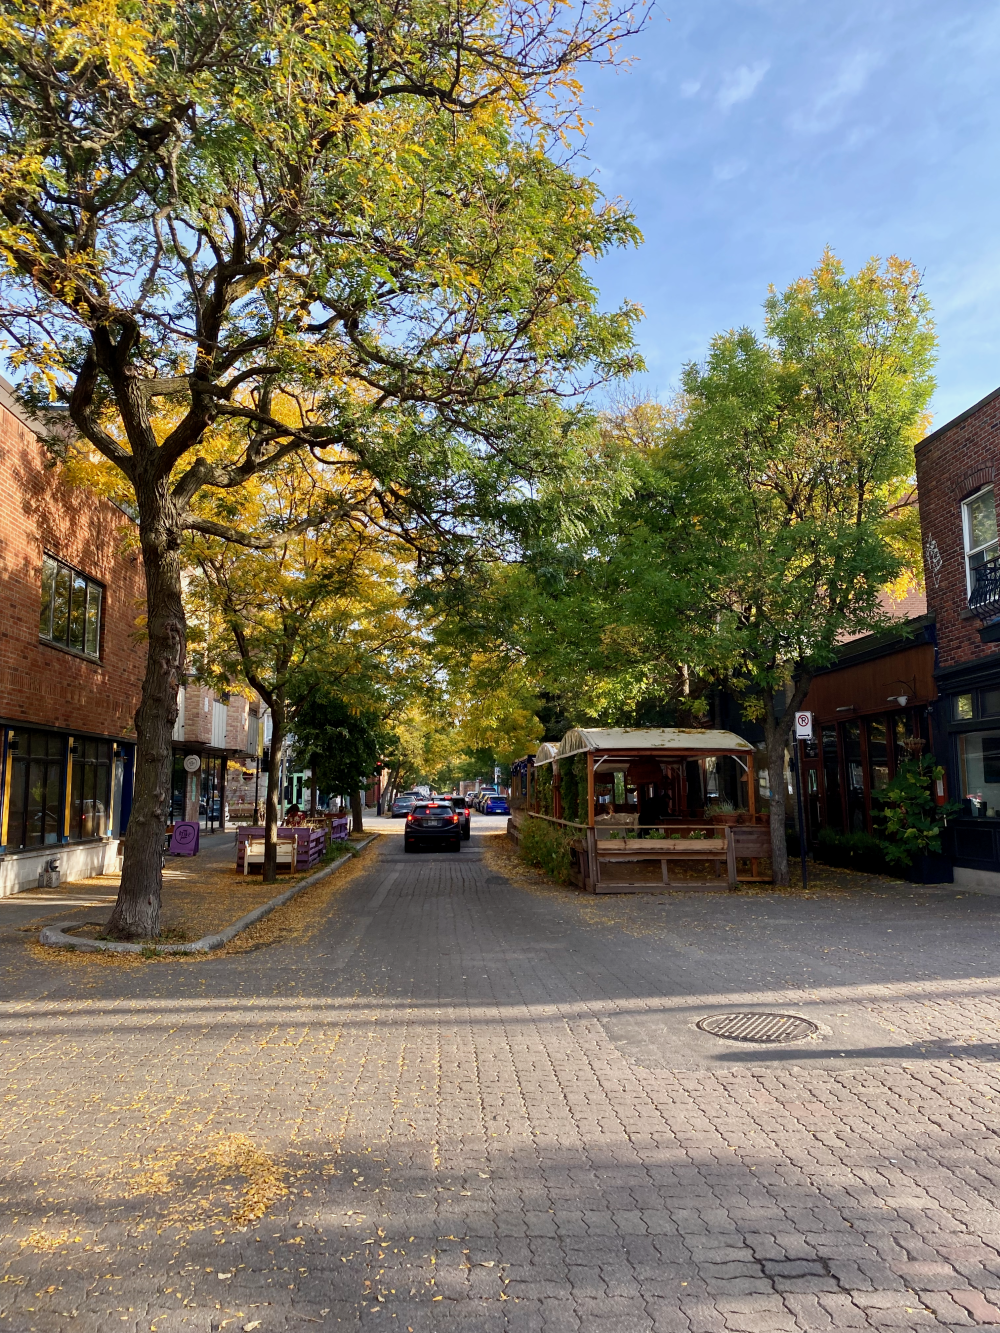 Leafy autumnal streets near Saint Laurent Boulevard